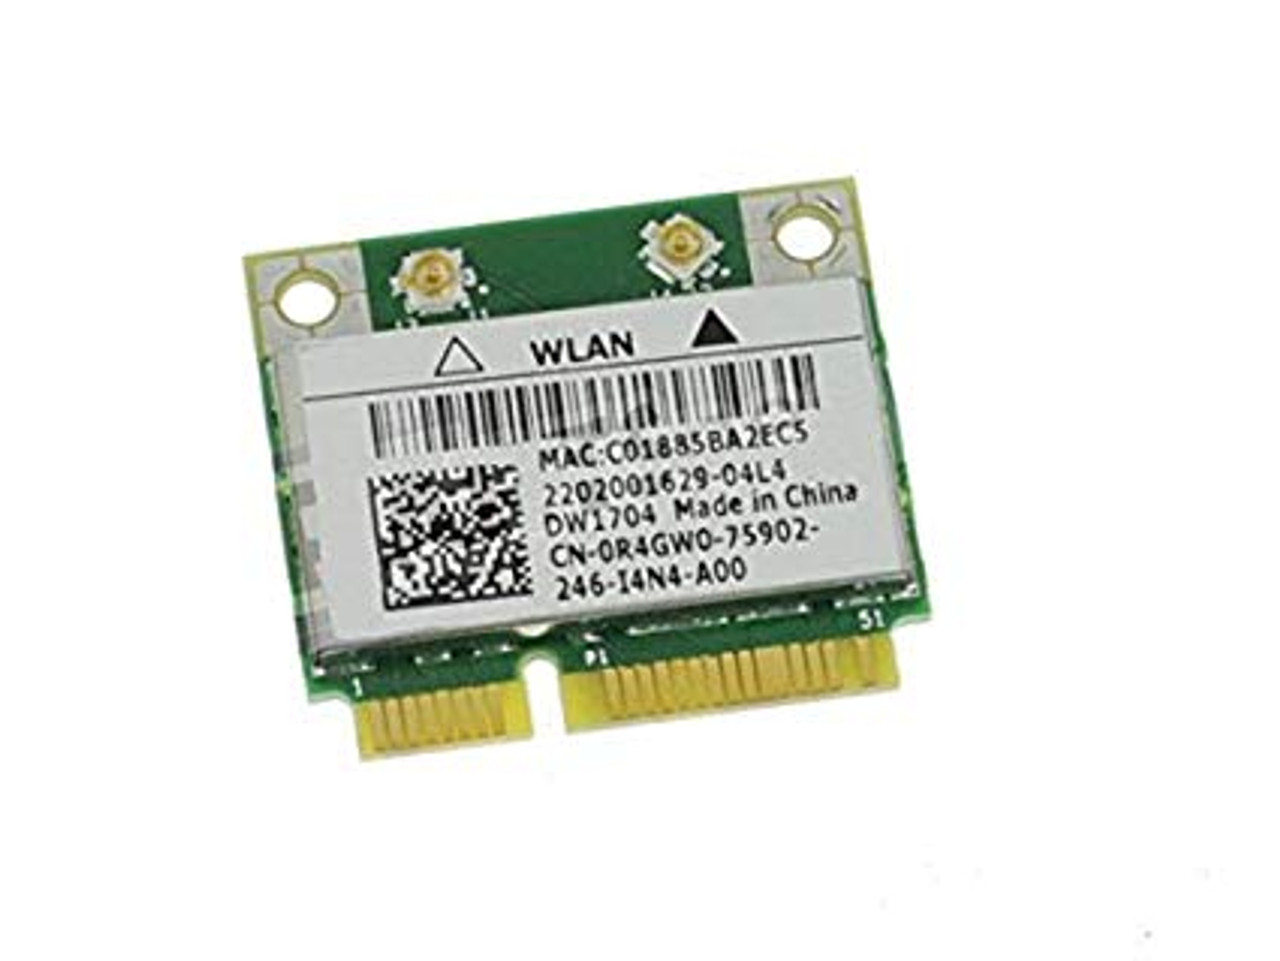 Dell Wireless DW1704 WLAN 802.11 b/g/n + Bluetooth Half-Height Mini-PCI Express Wifi Card - R4GW0